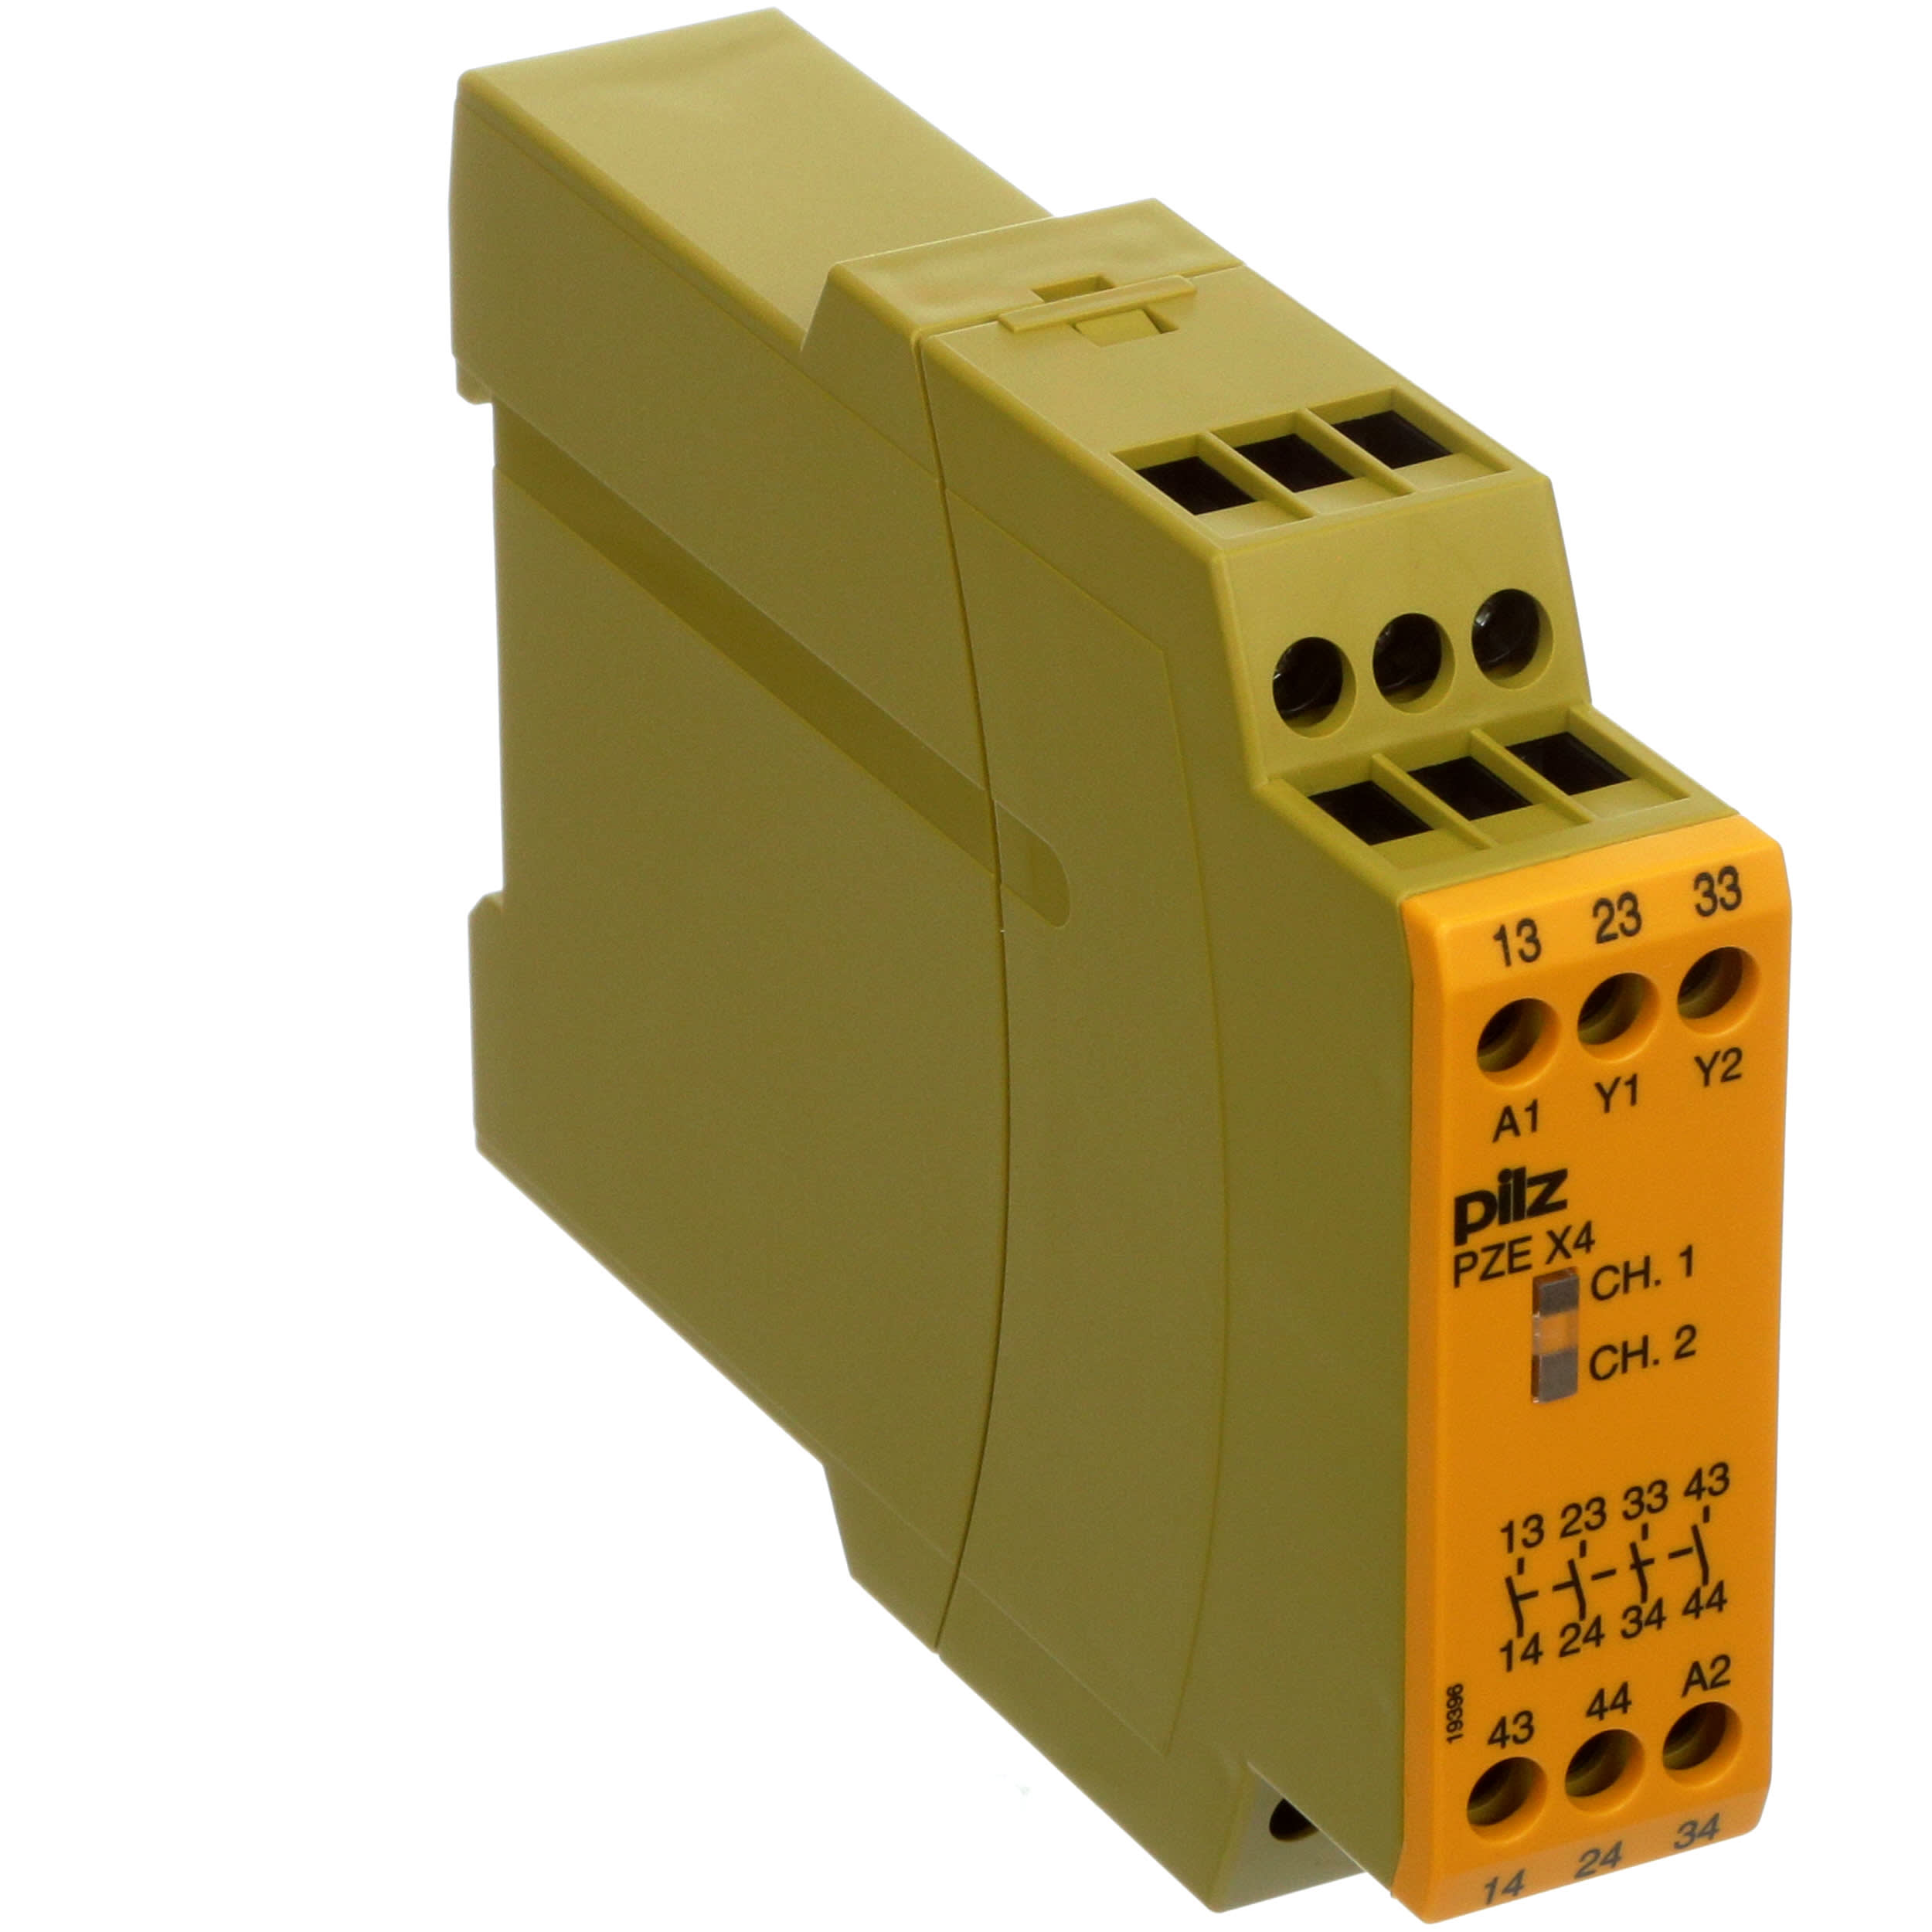 Pilz safety relay PZE X4V8 24VDC 774584 1PCS 